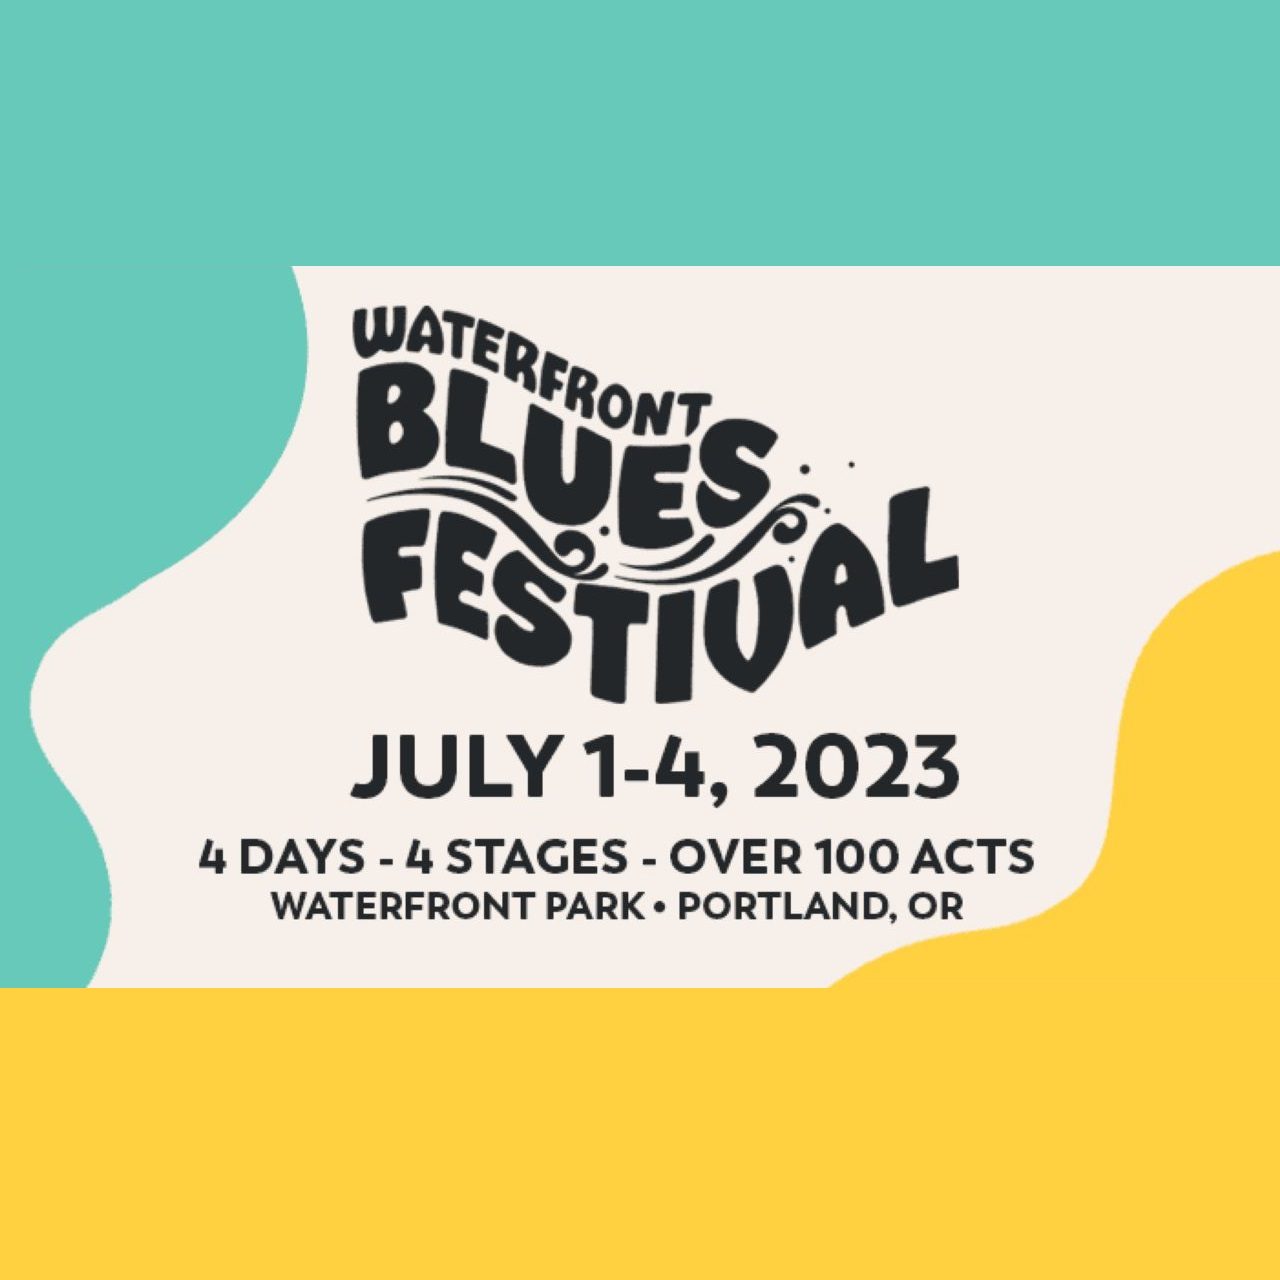 Waterfront Blues Festival 2023